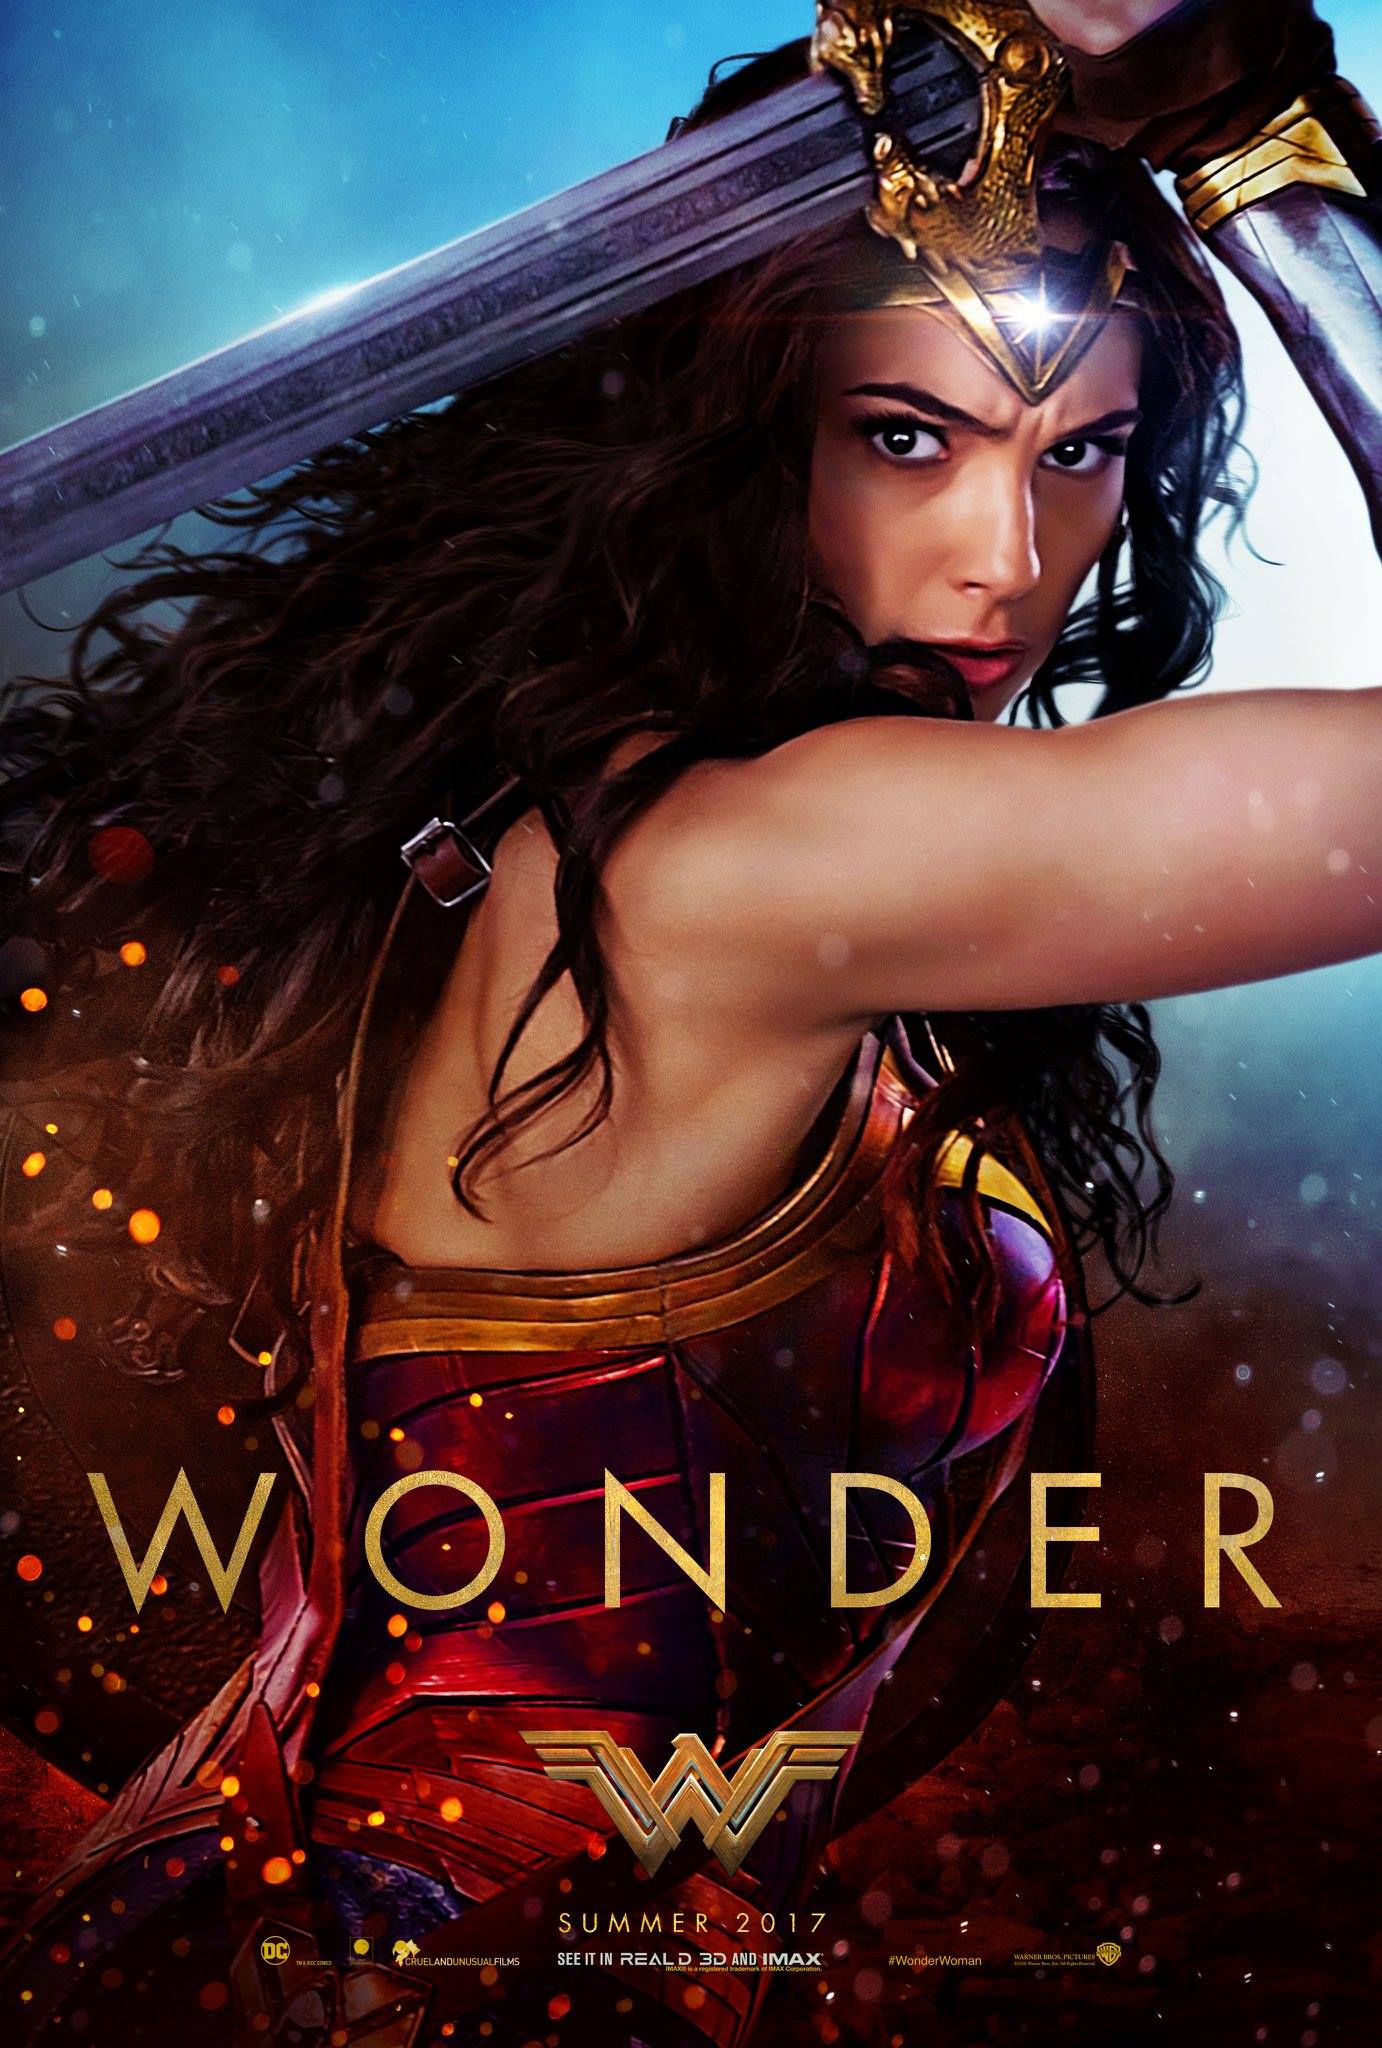 Prvi pogled: "Wonder Woman"